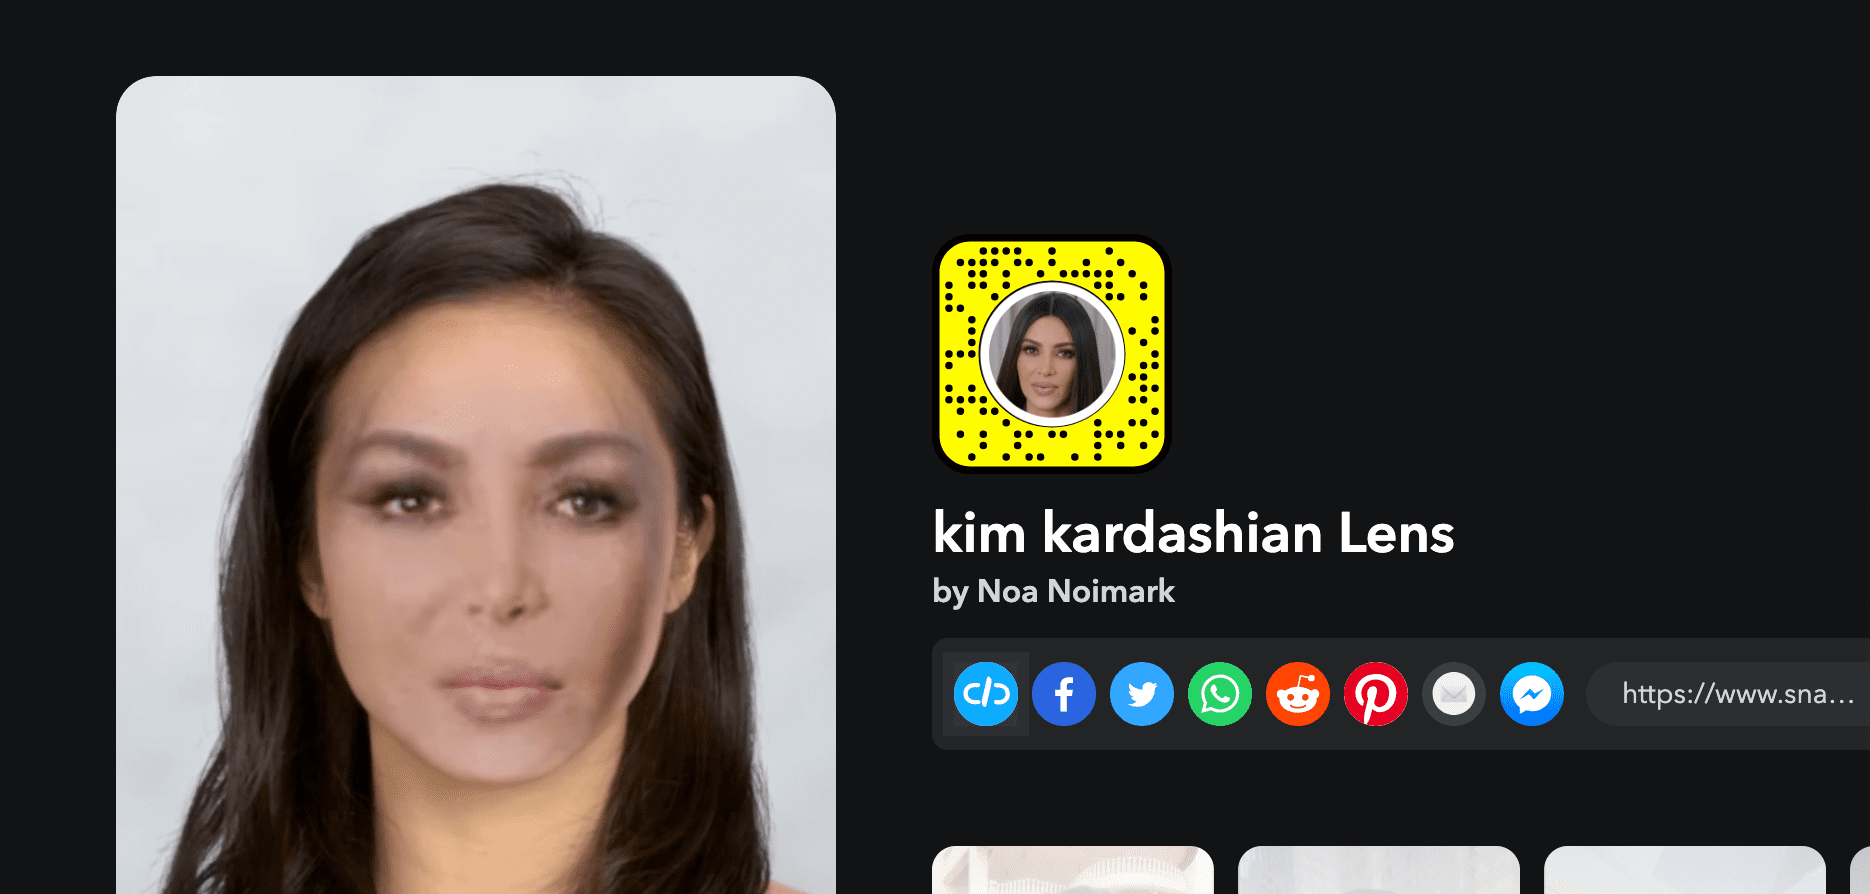 Kim Kardashian Lens by Noa Naimark